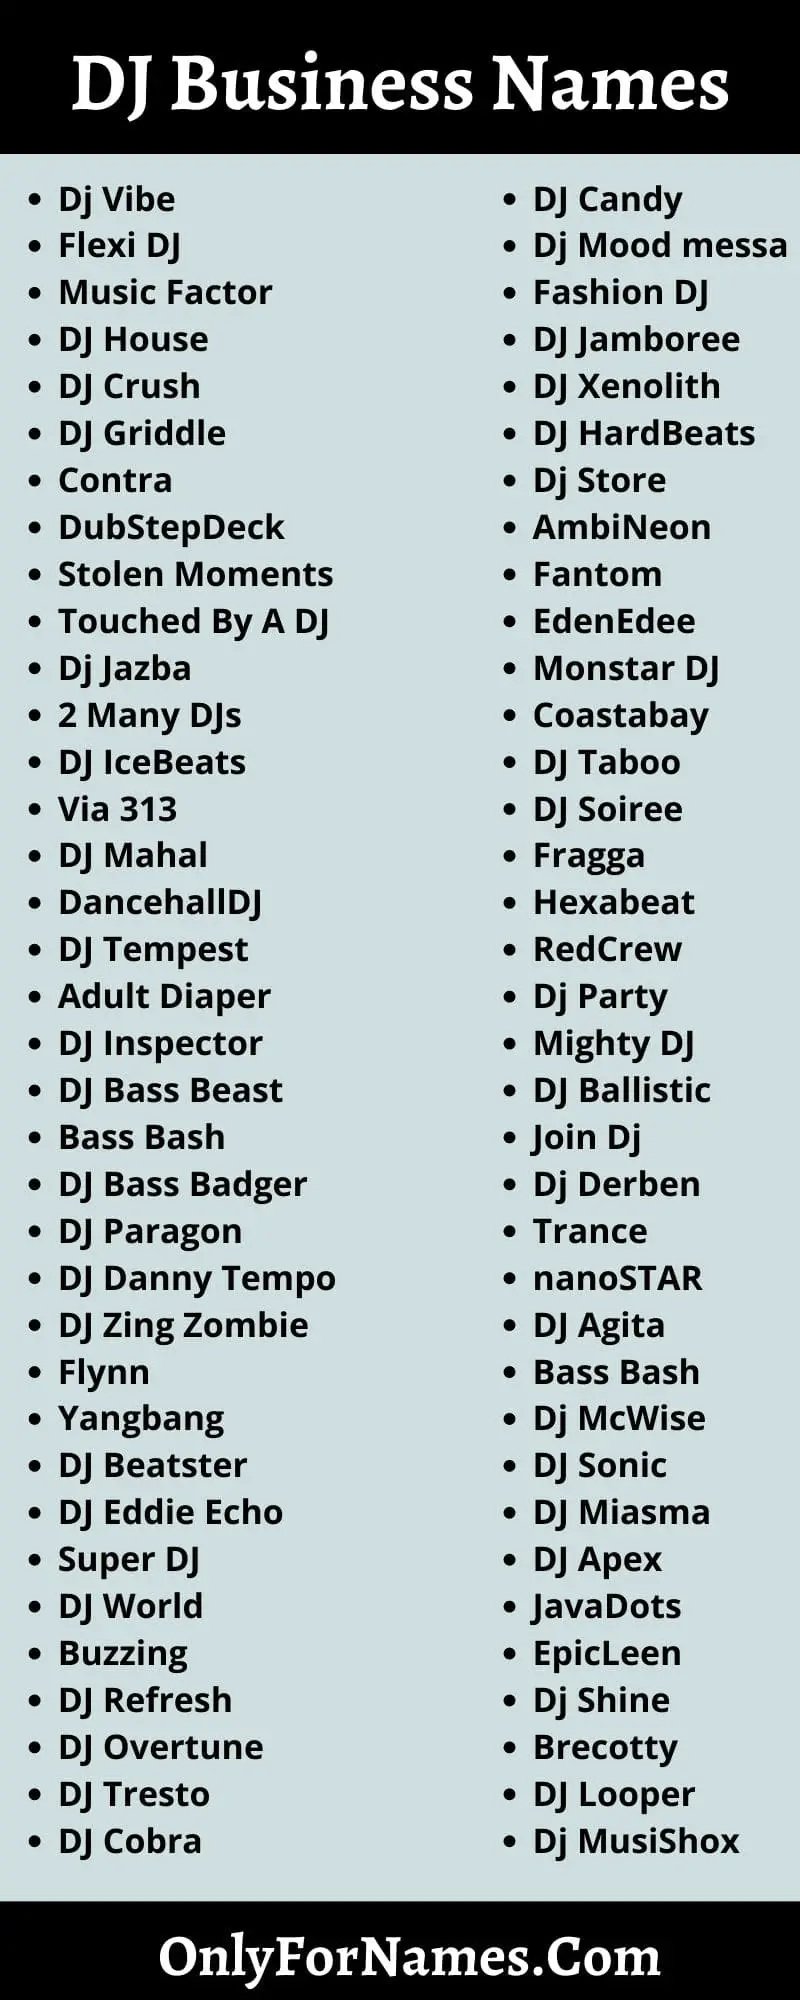 DJ Business Names